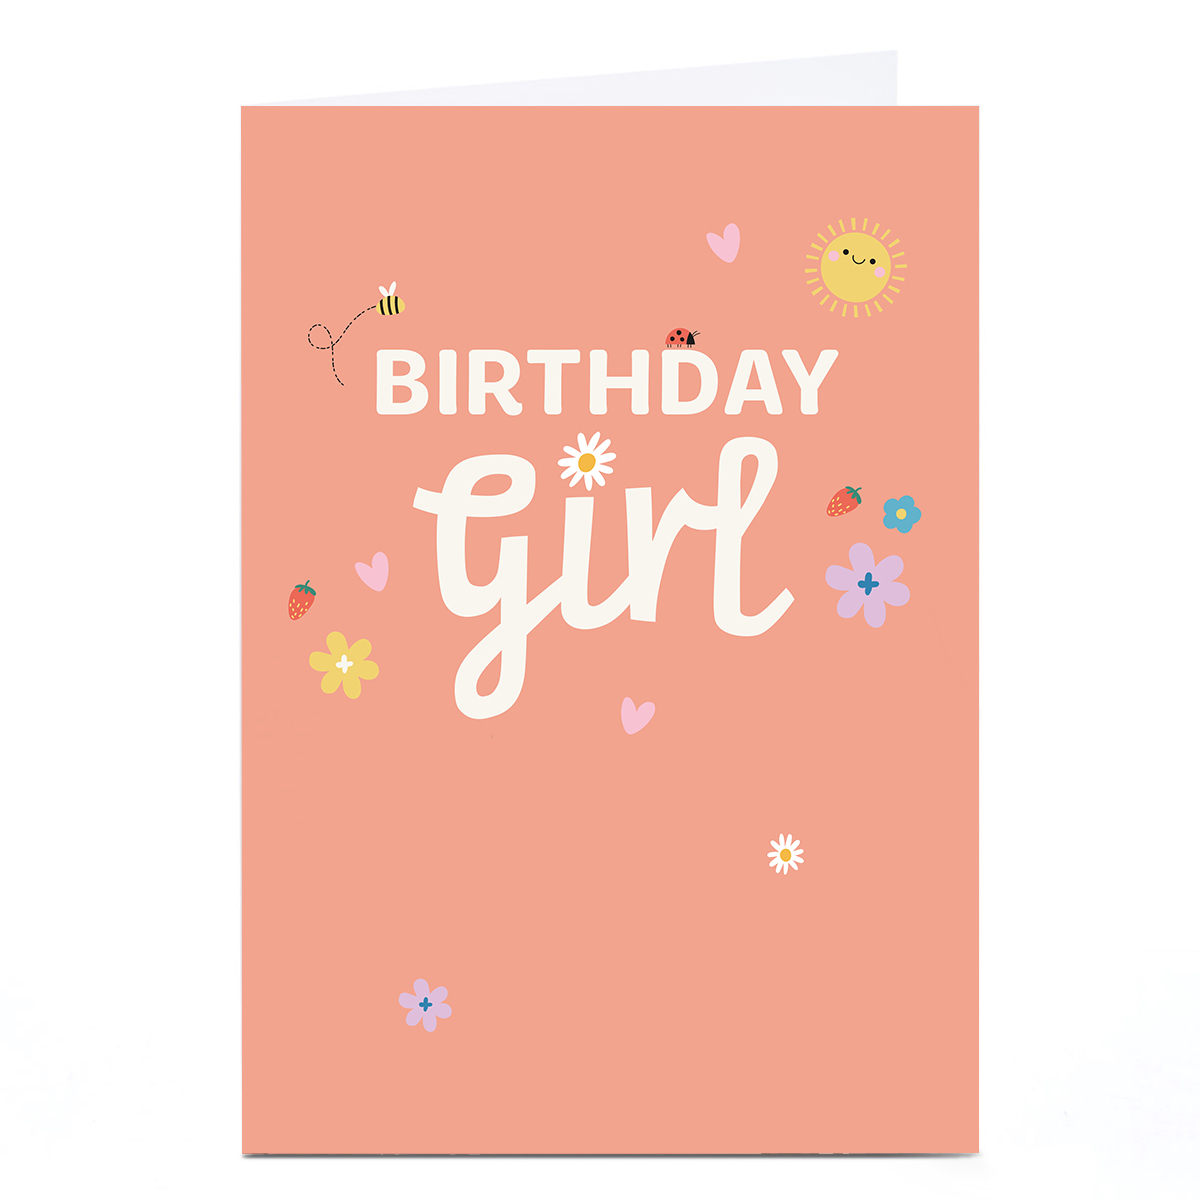 Buy Personalised Frances Wilson Birthday Card - Birthday Girl for GBP 2 ...